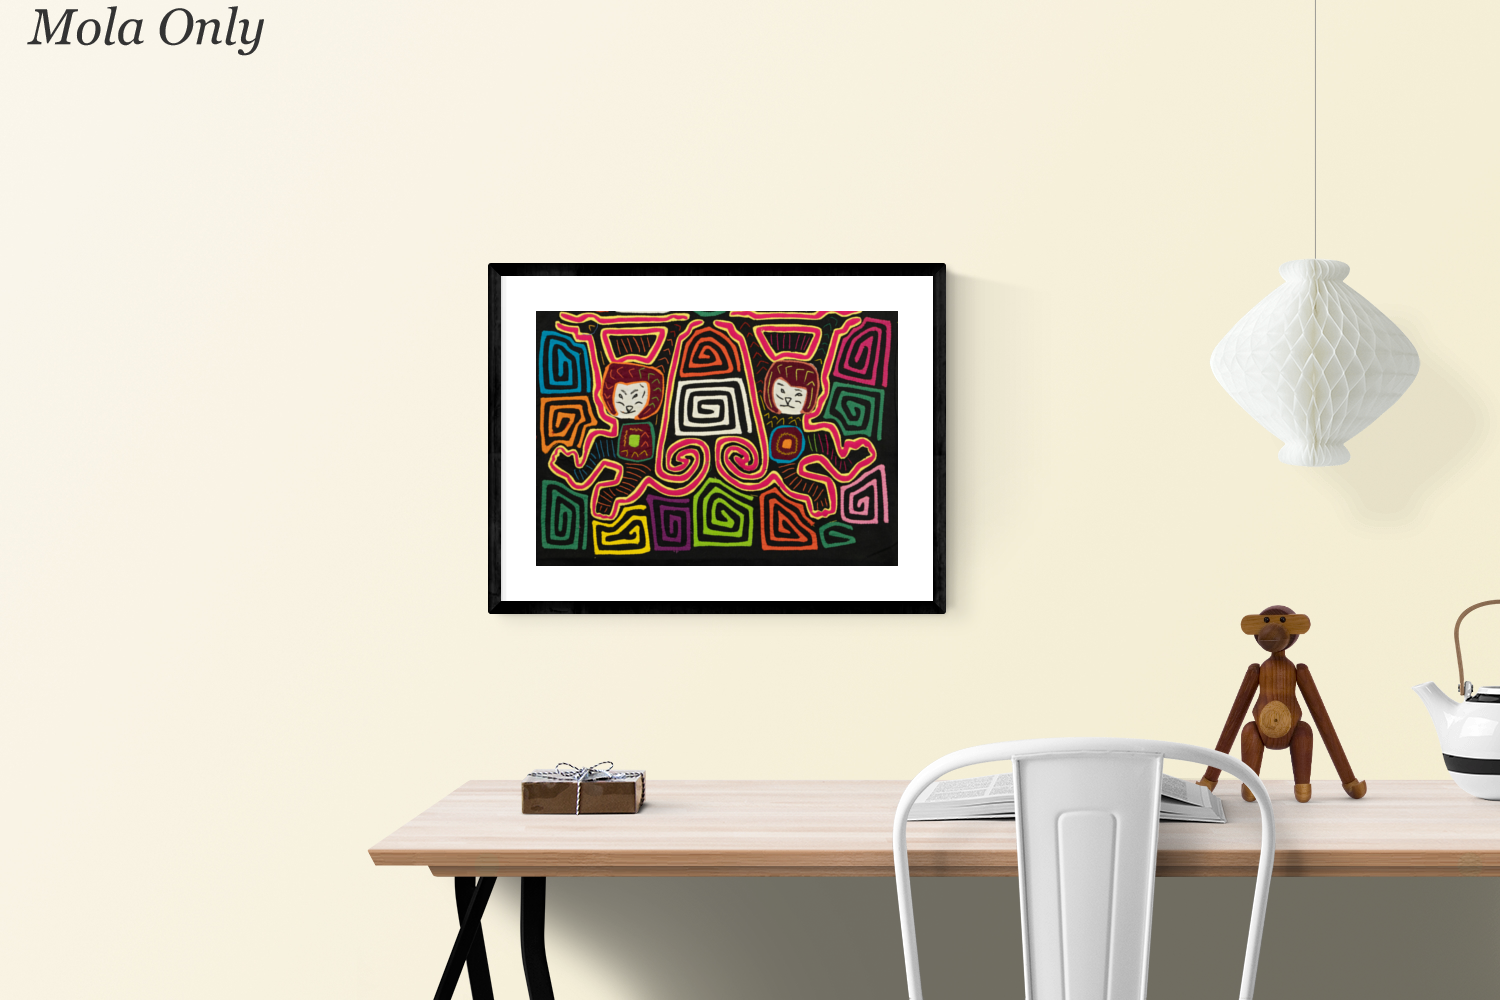 Space Cadet Monkey Mola, Wall Decor, Panama Mola, Latin American Art, Handmade Quilt, Wall Hanging, Mola Wall Art